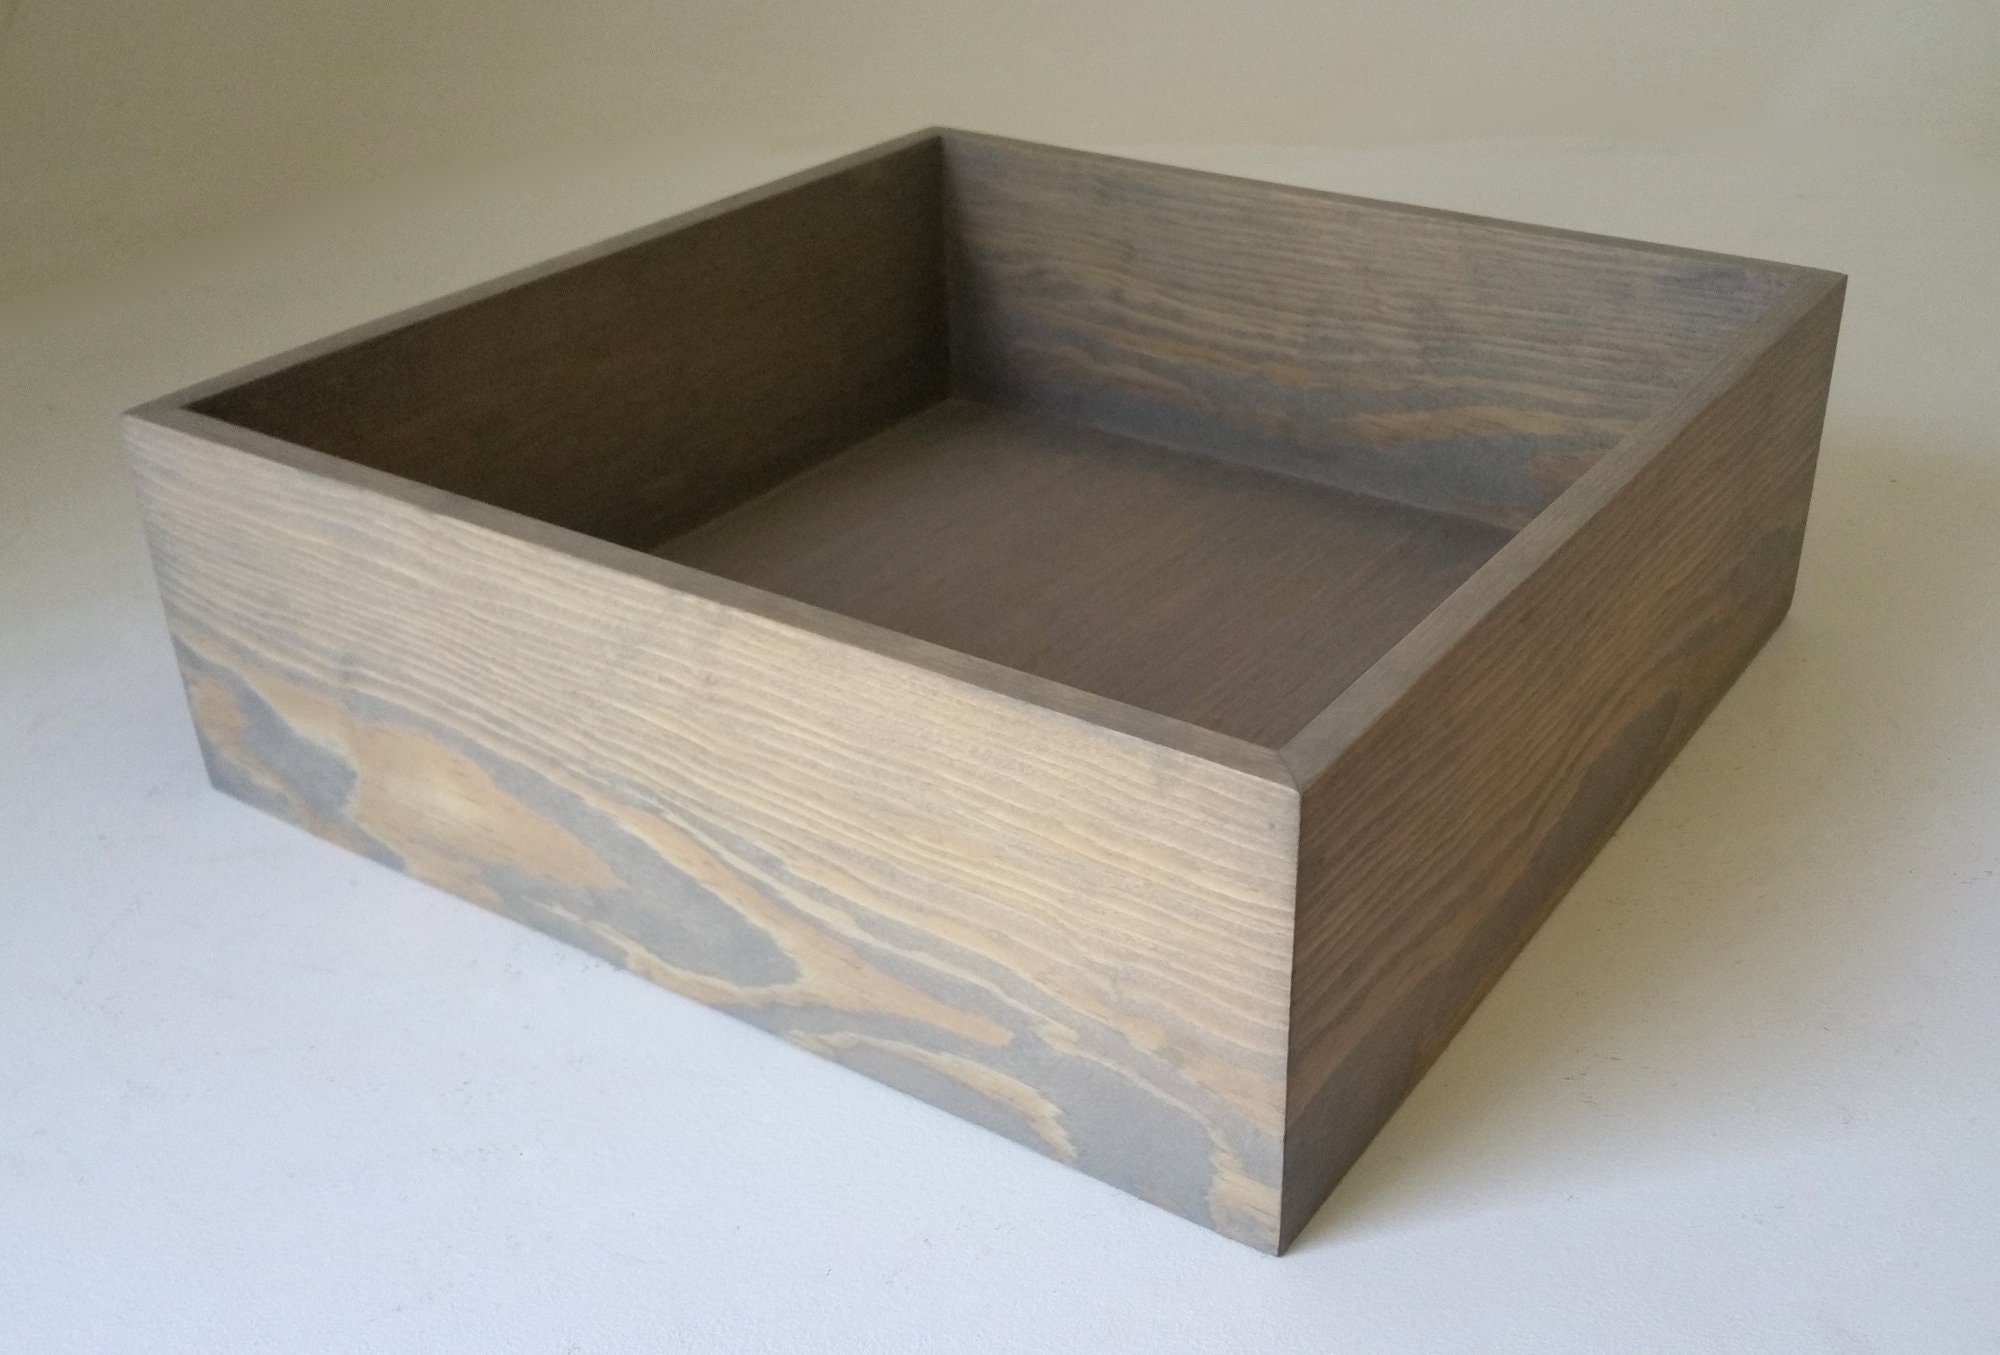  Voittozege Paquete de 12 cajas de madera pequeñas sin terminar,  caja cuadrada de madera rústica de 4 pulgadas para manualidades, caja de  madera, centro de mesa, cajas de madera cuadradas pequeñas 